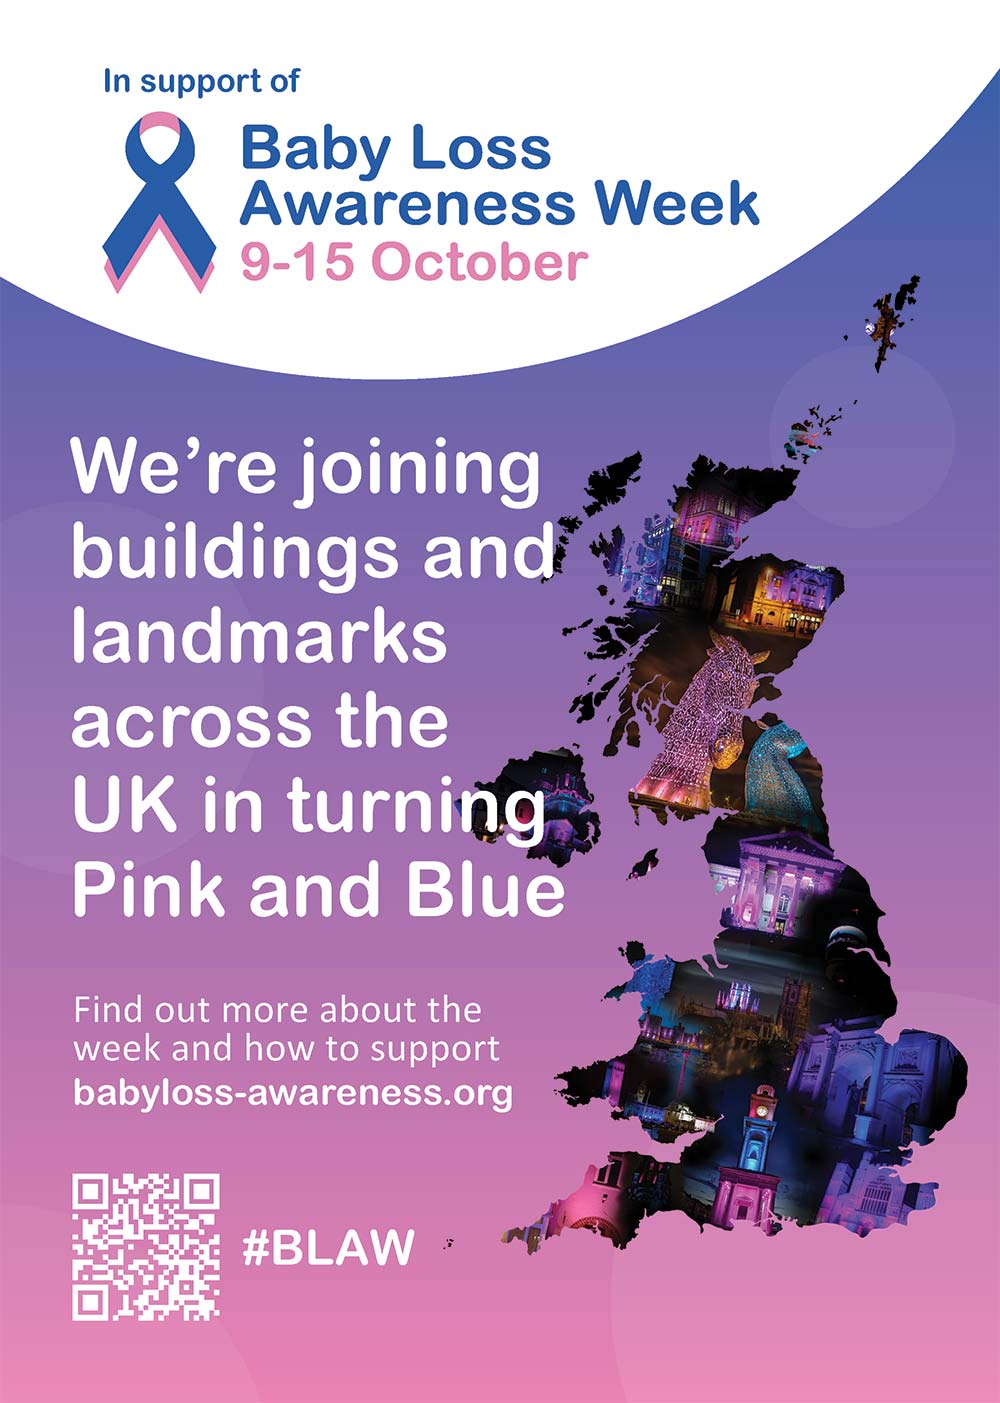 Baby Loss Awareness Week 9 - 15 October